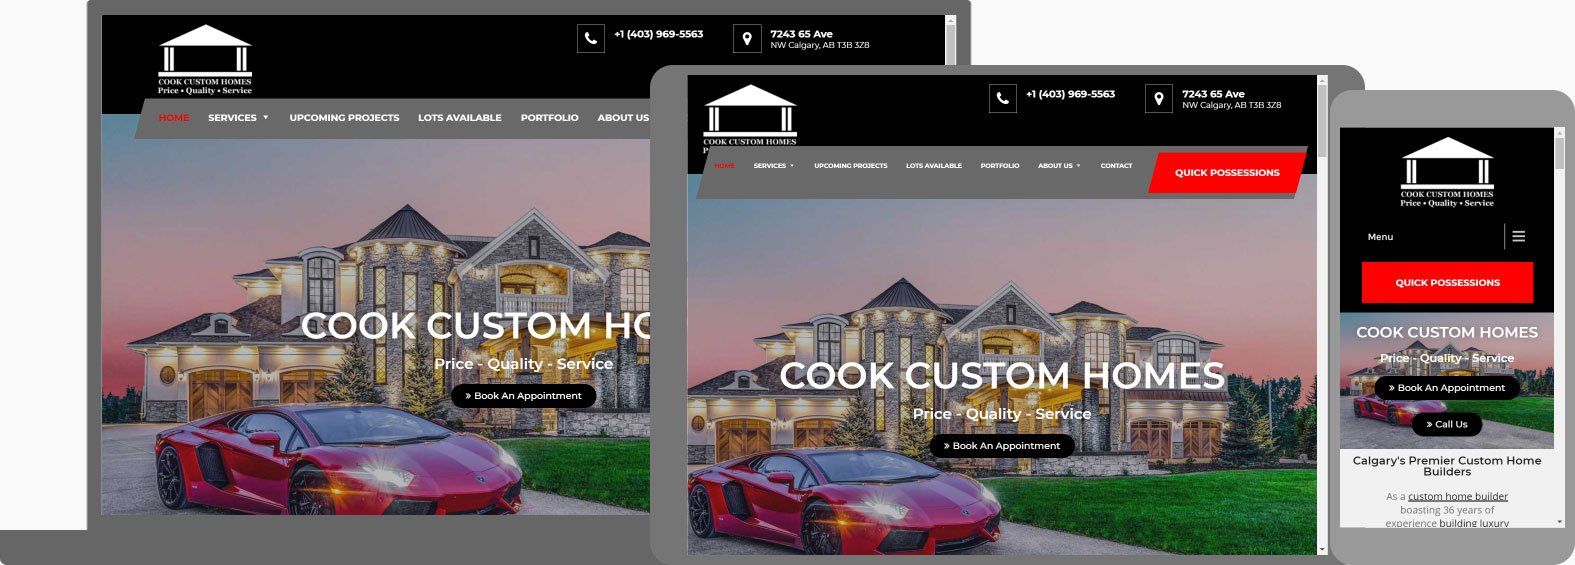 Home Builder Website - Cook Custom Homes